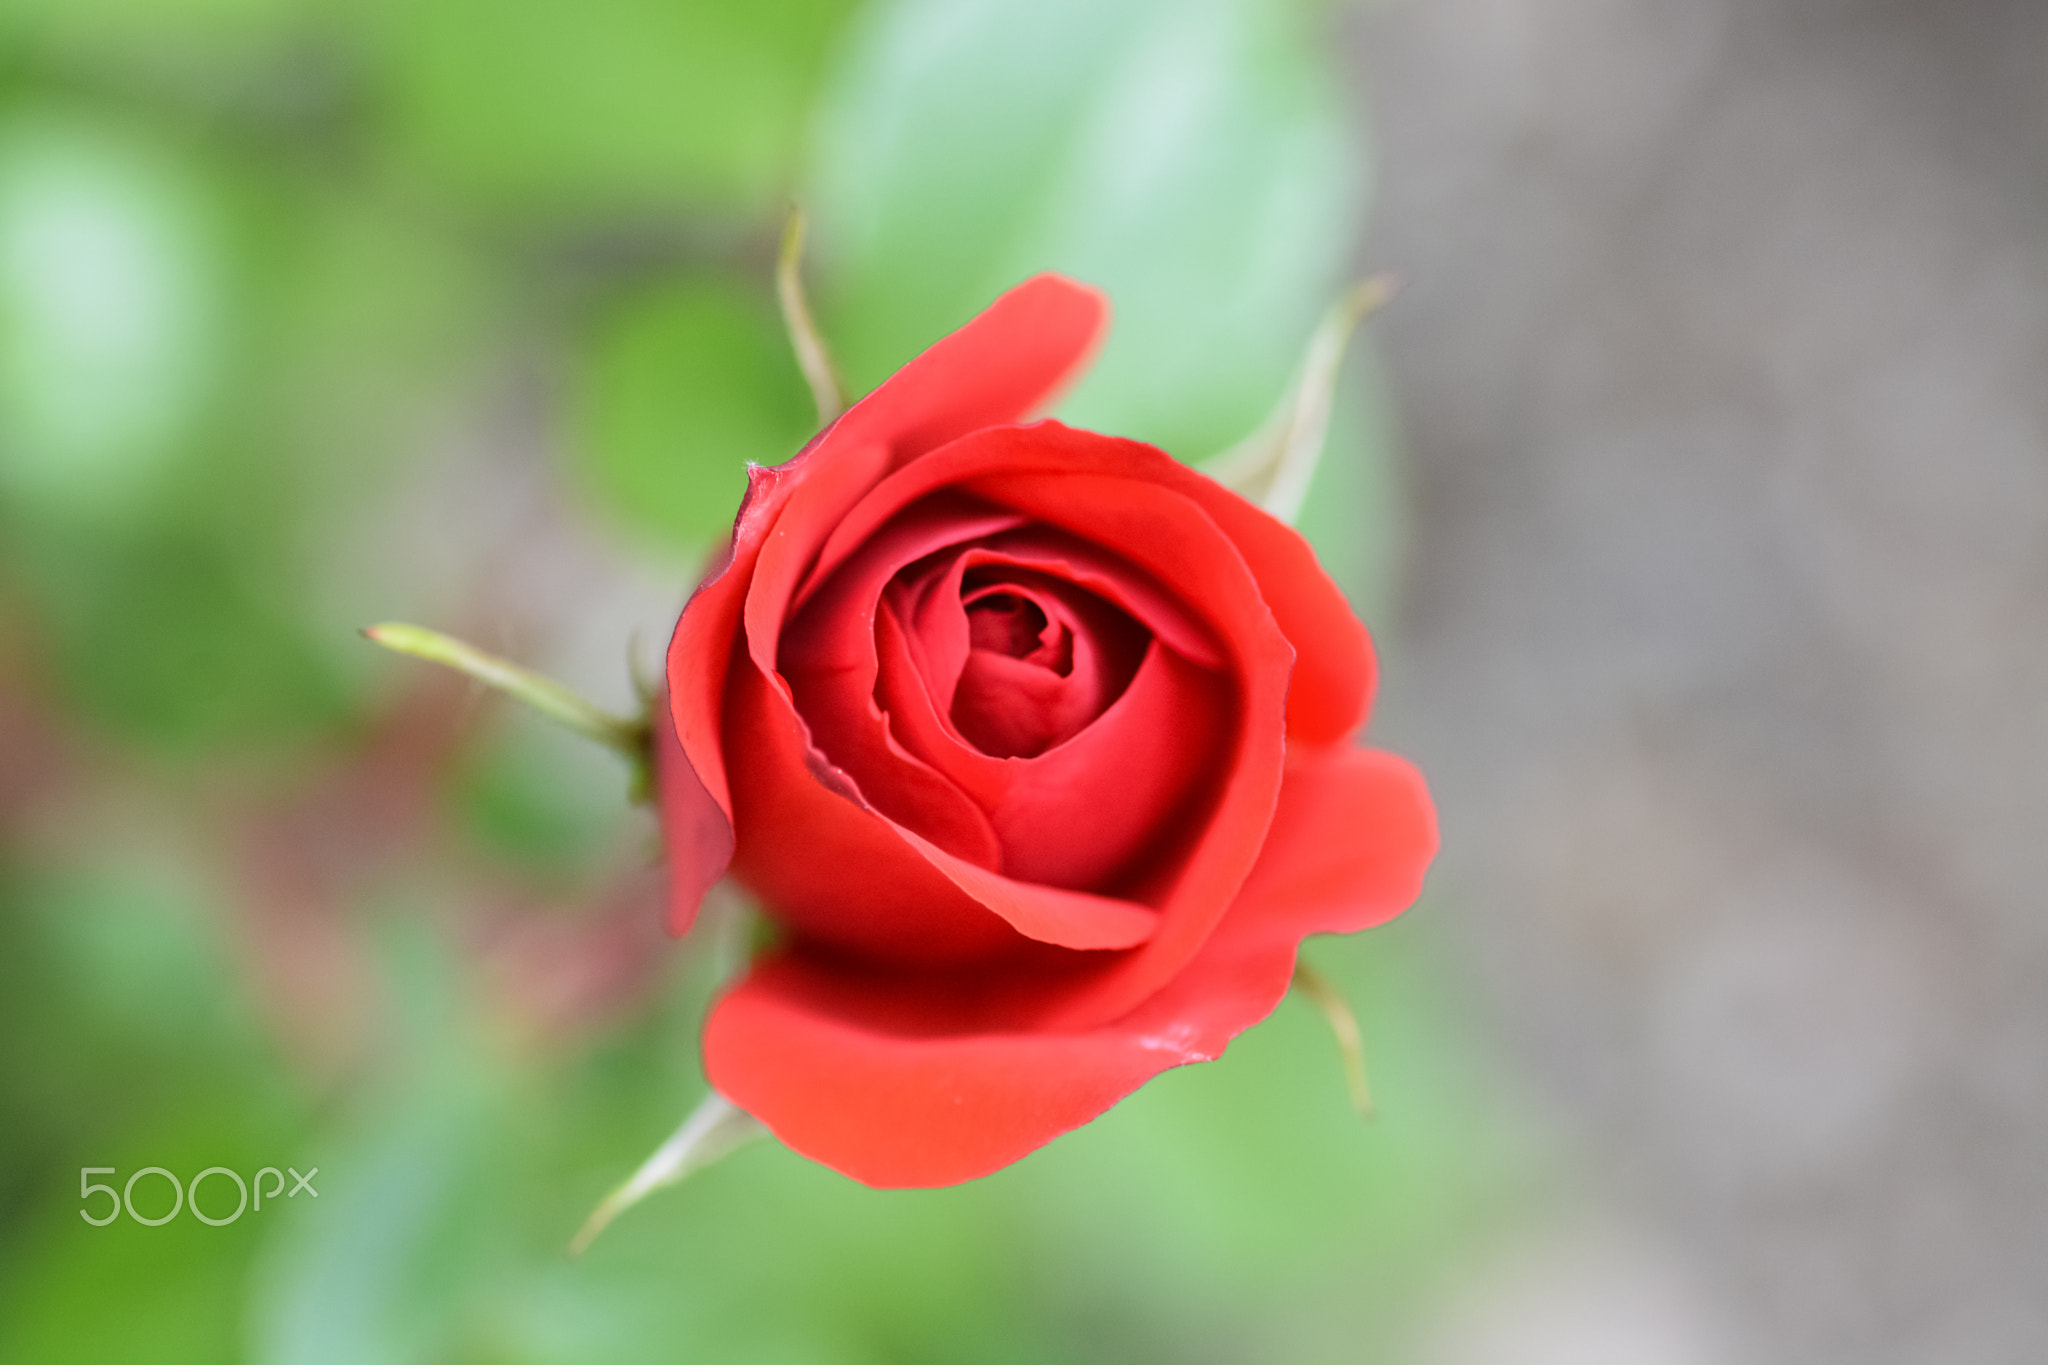 Rose of May